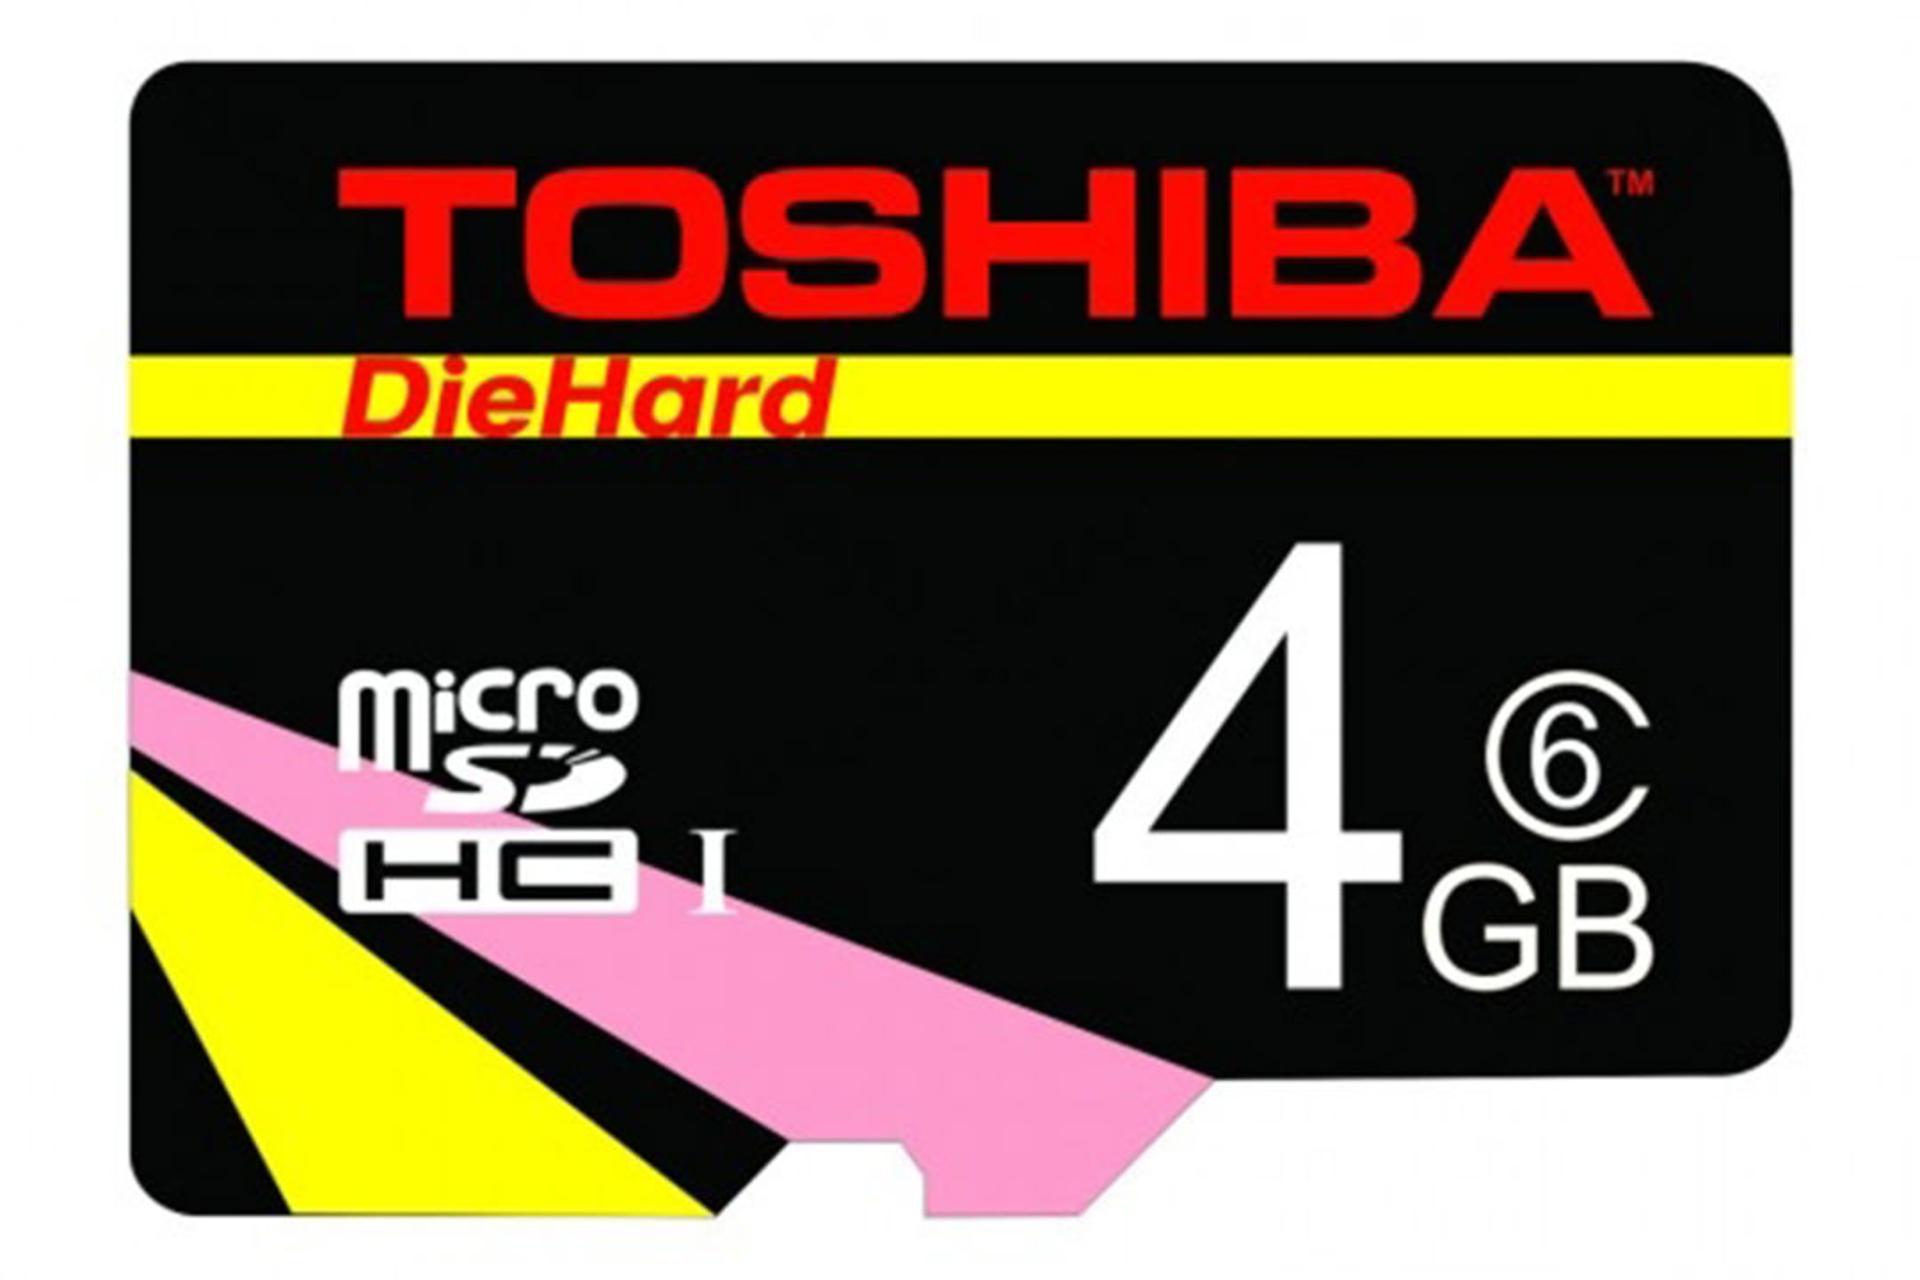 Toshiba Die Hard microSDHC Class 6 UHS-I U1 4GB